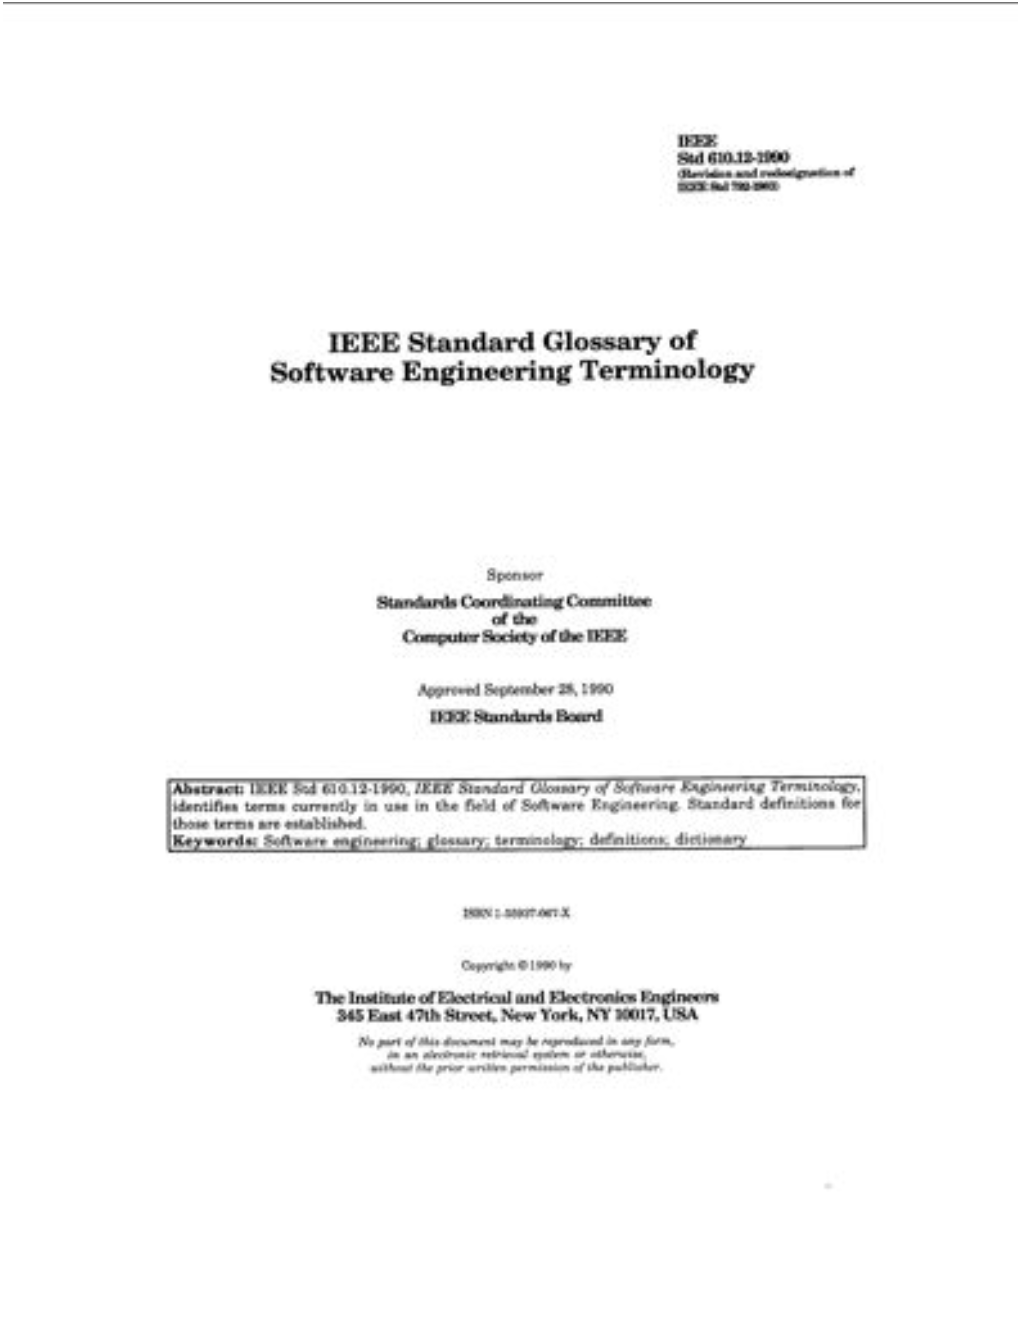 IEEE Standard Glossary of Software Engineering Terminology